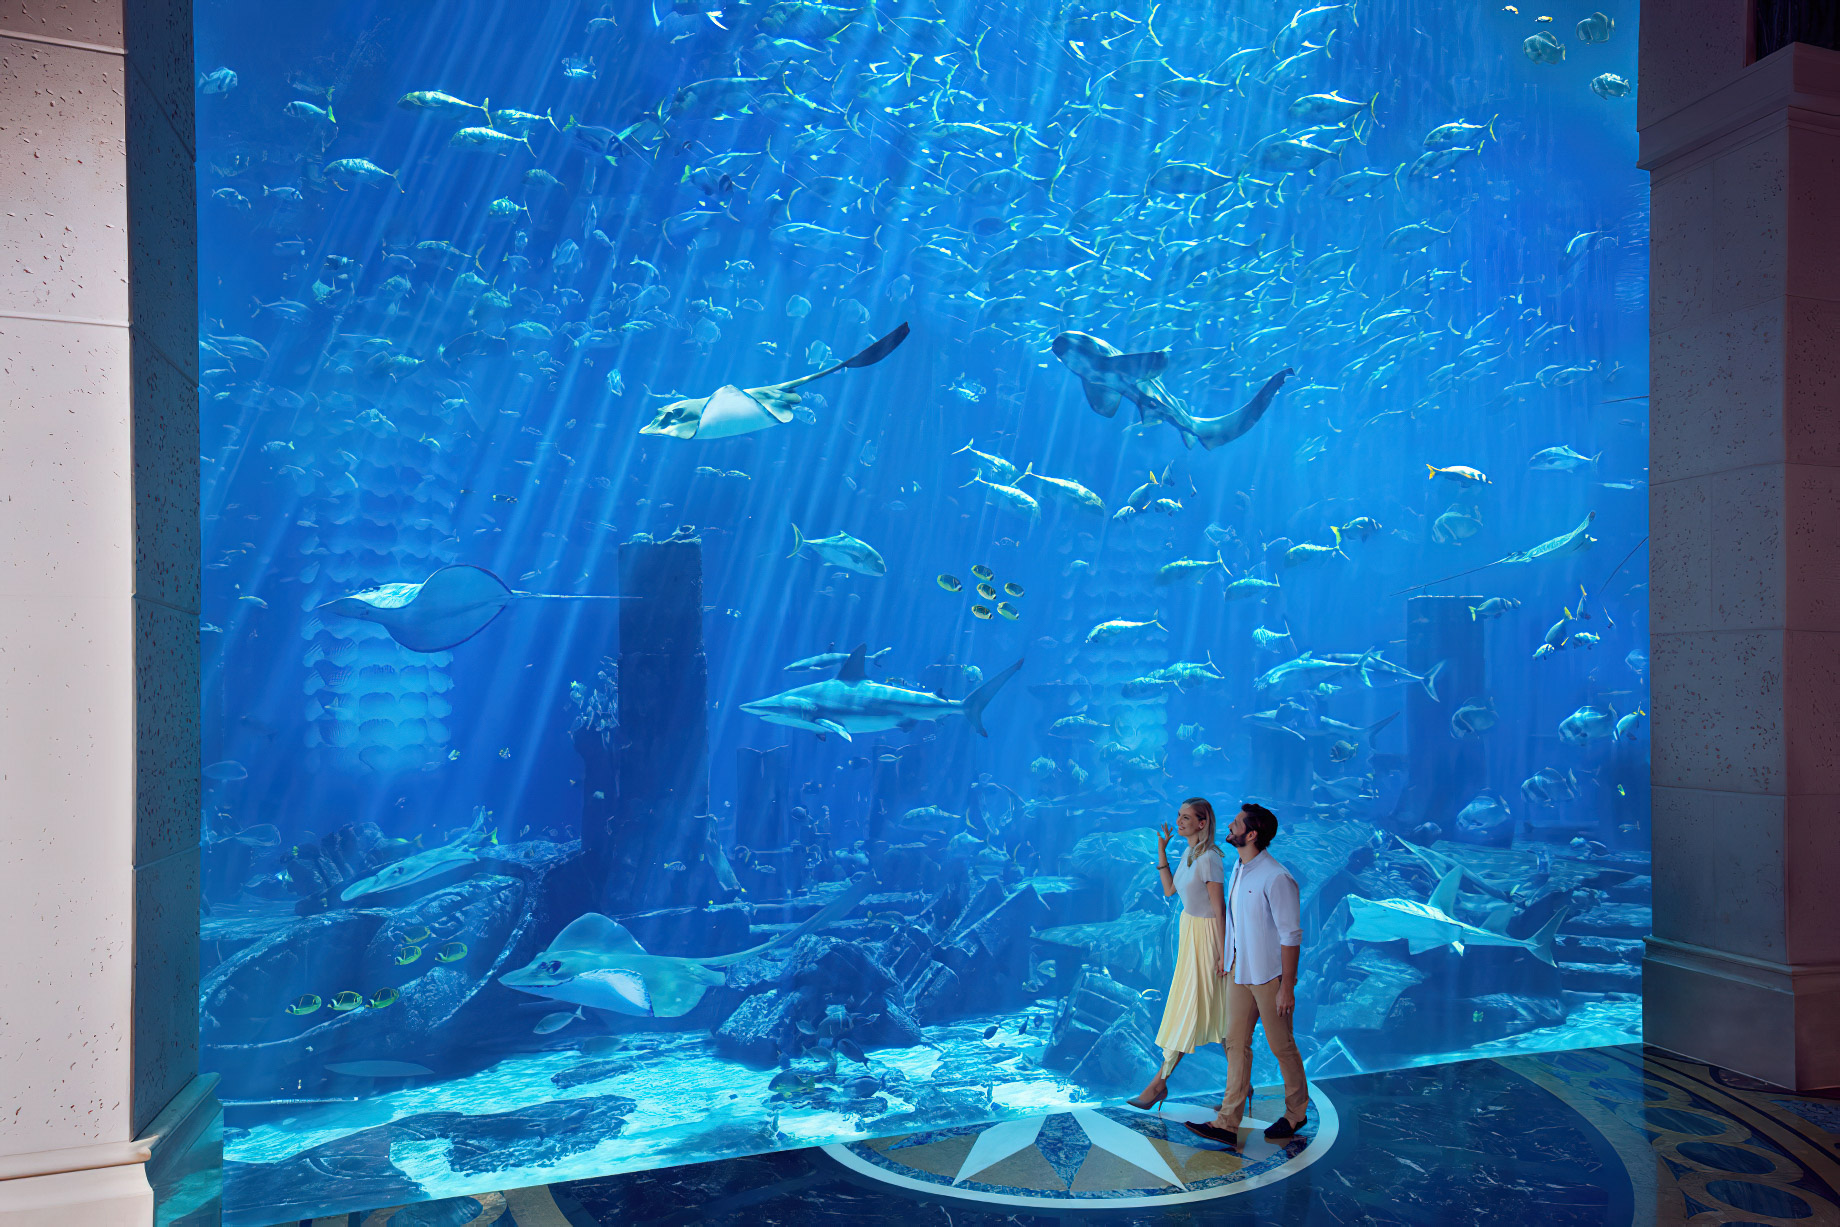 Atlantis The Palm Resort – Crescent Rd, Dubai, UAE – Underwater Aquarium View Glass Wall